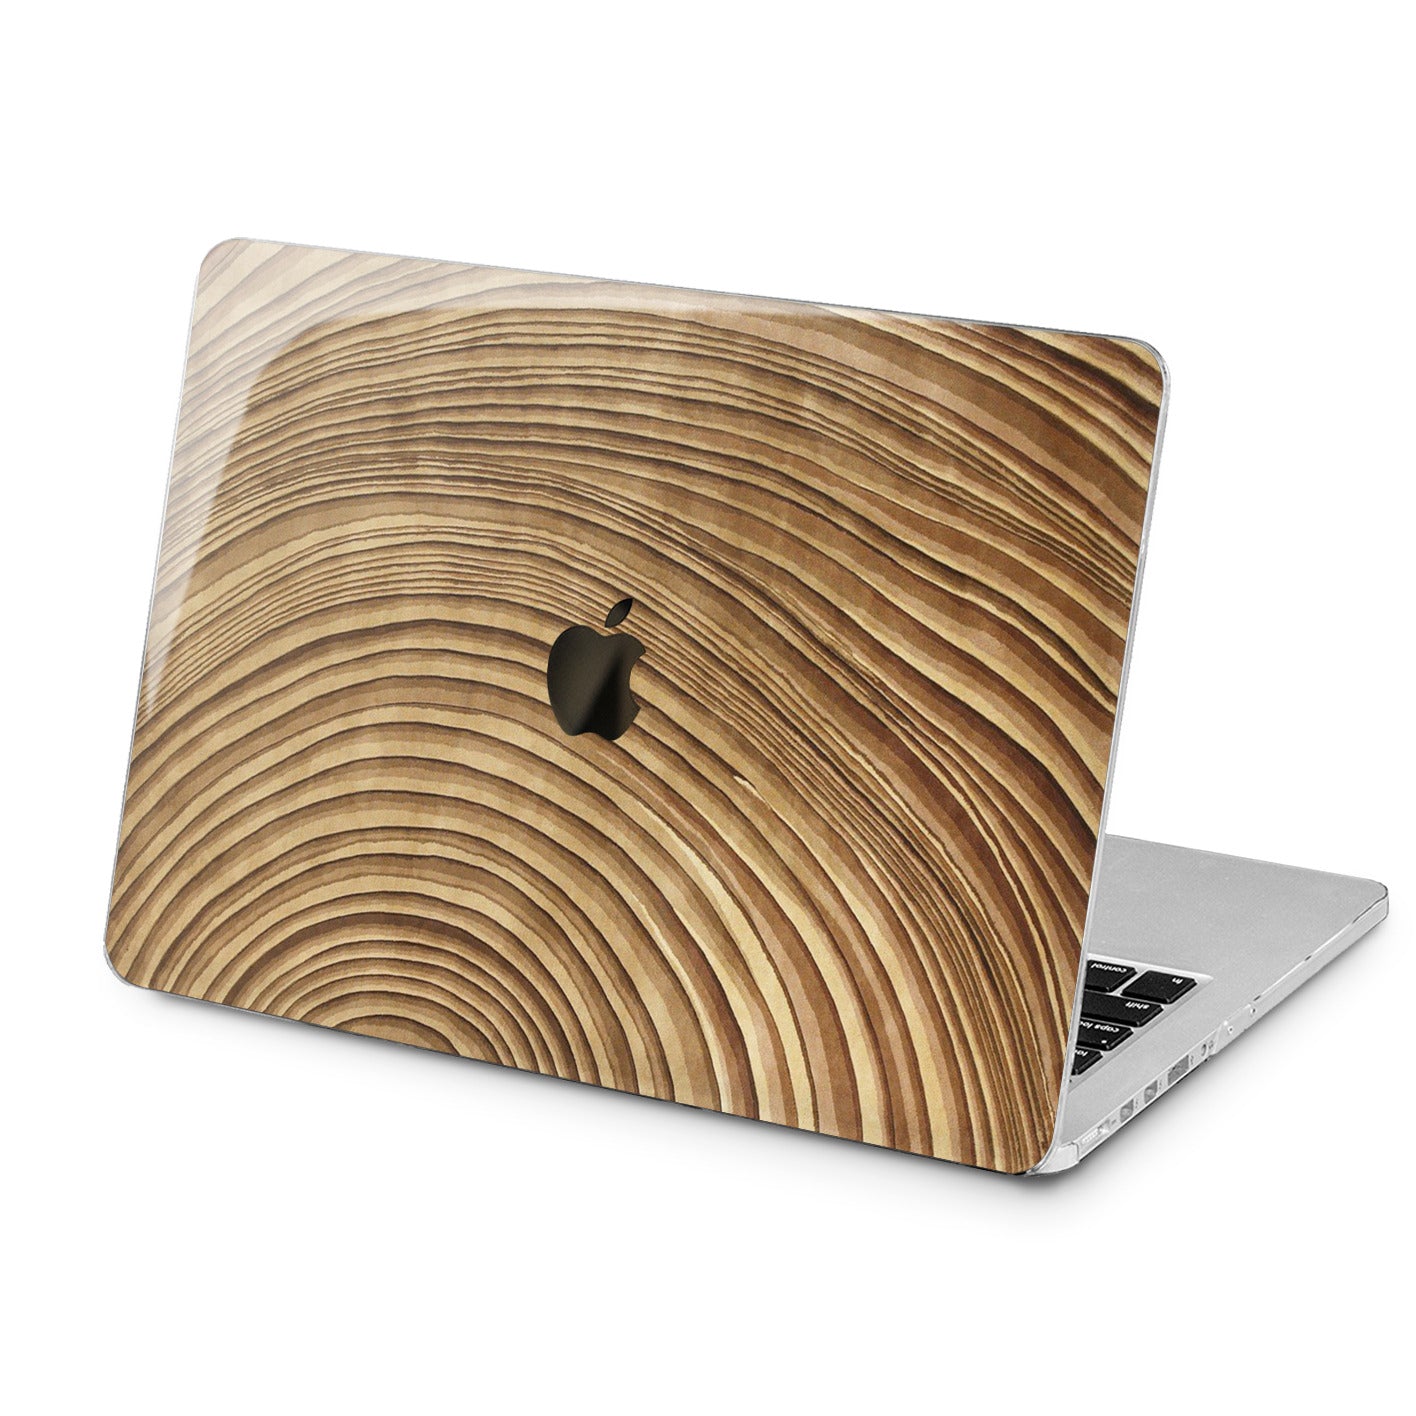 Lex Altern Lex Altern Rounded Wooden Art Case for your Laptop Apple Macbook.